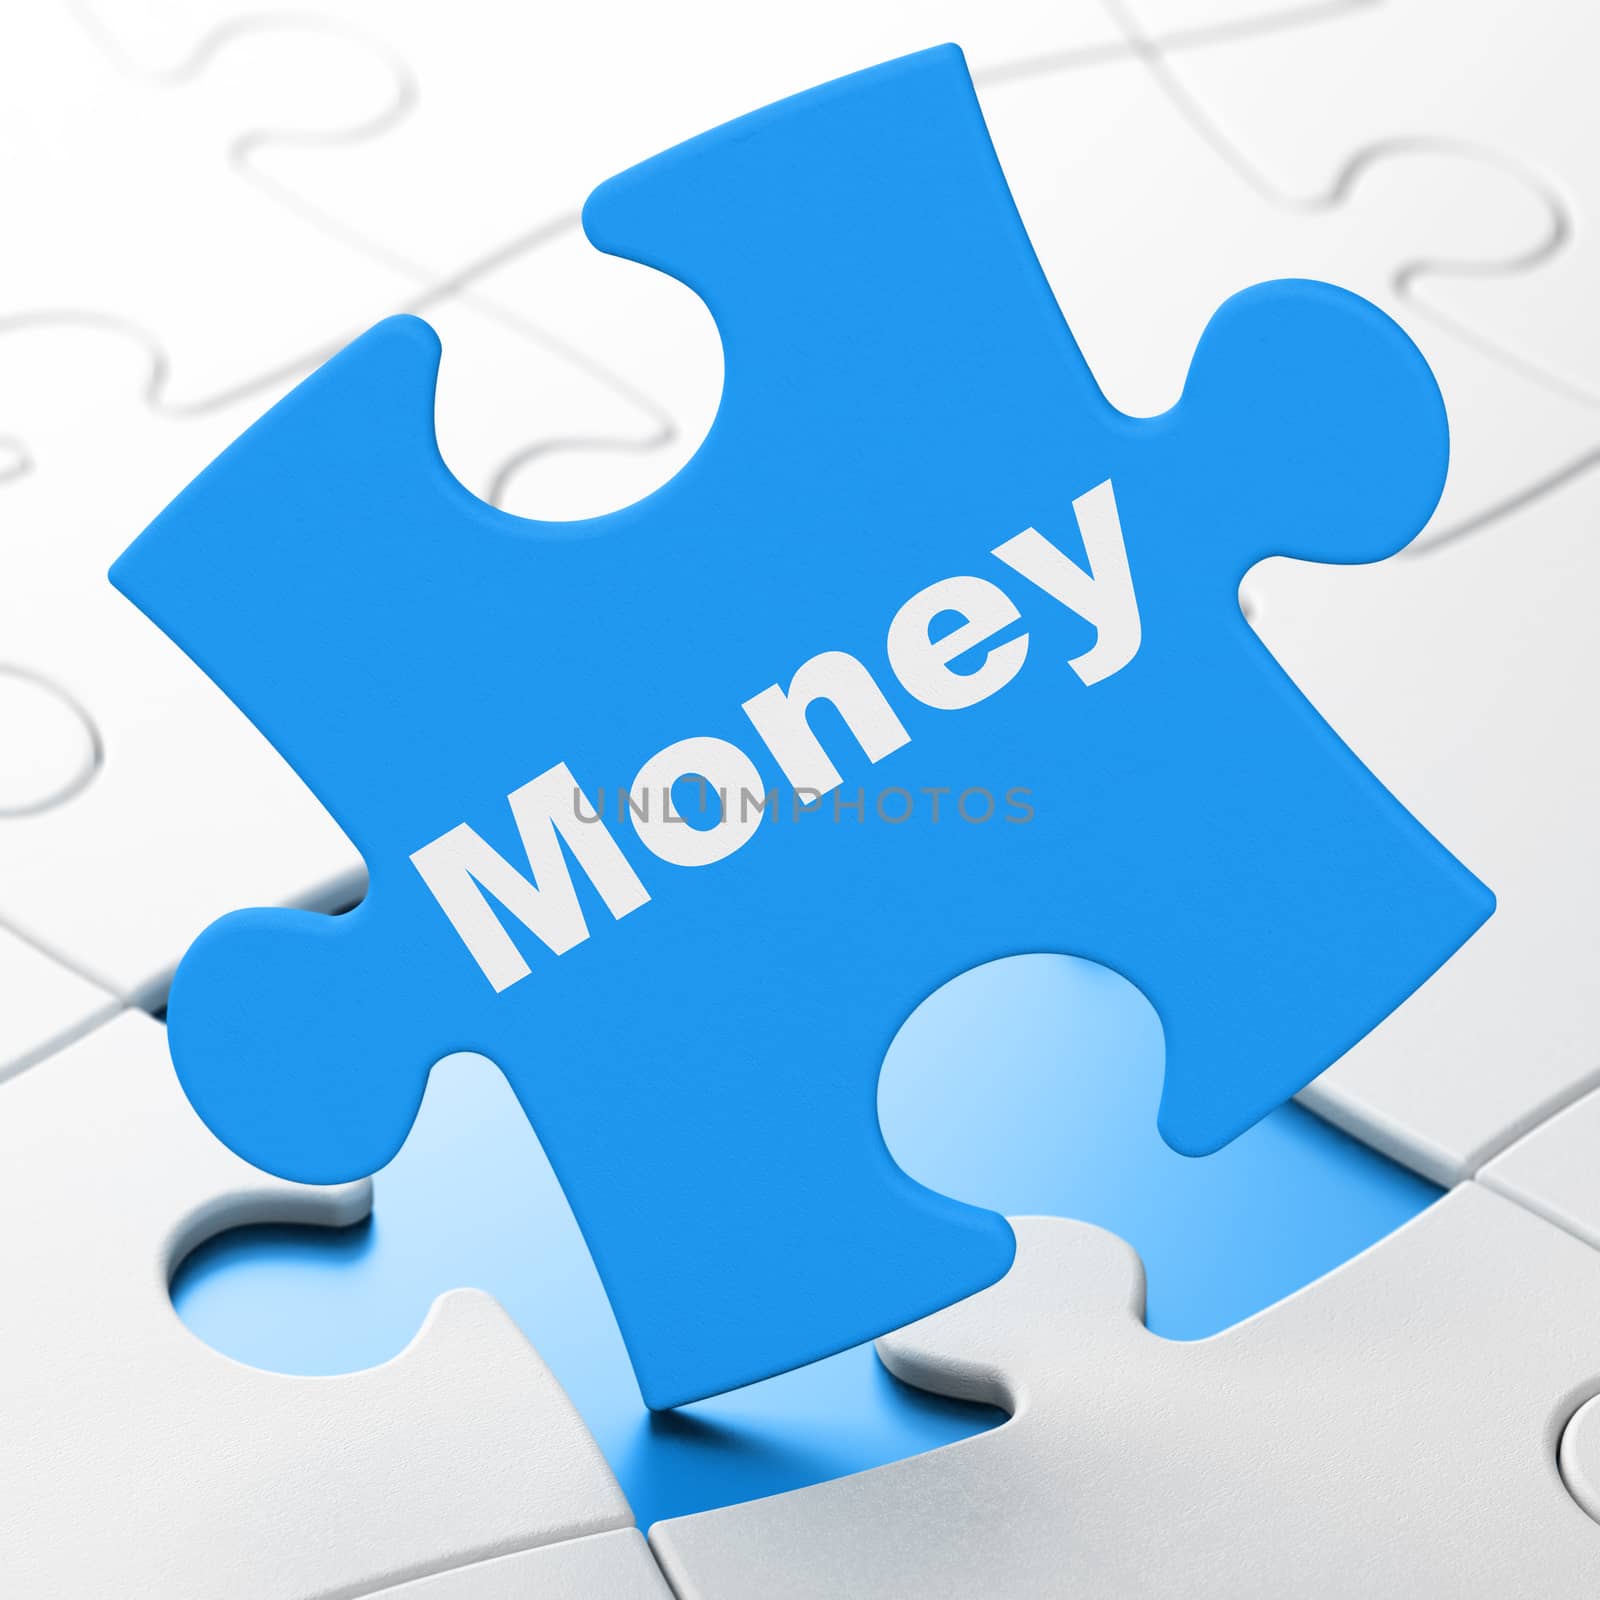 Money concept: Money on Blue puzzle pieces background, 3D rendering